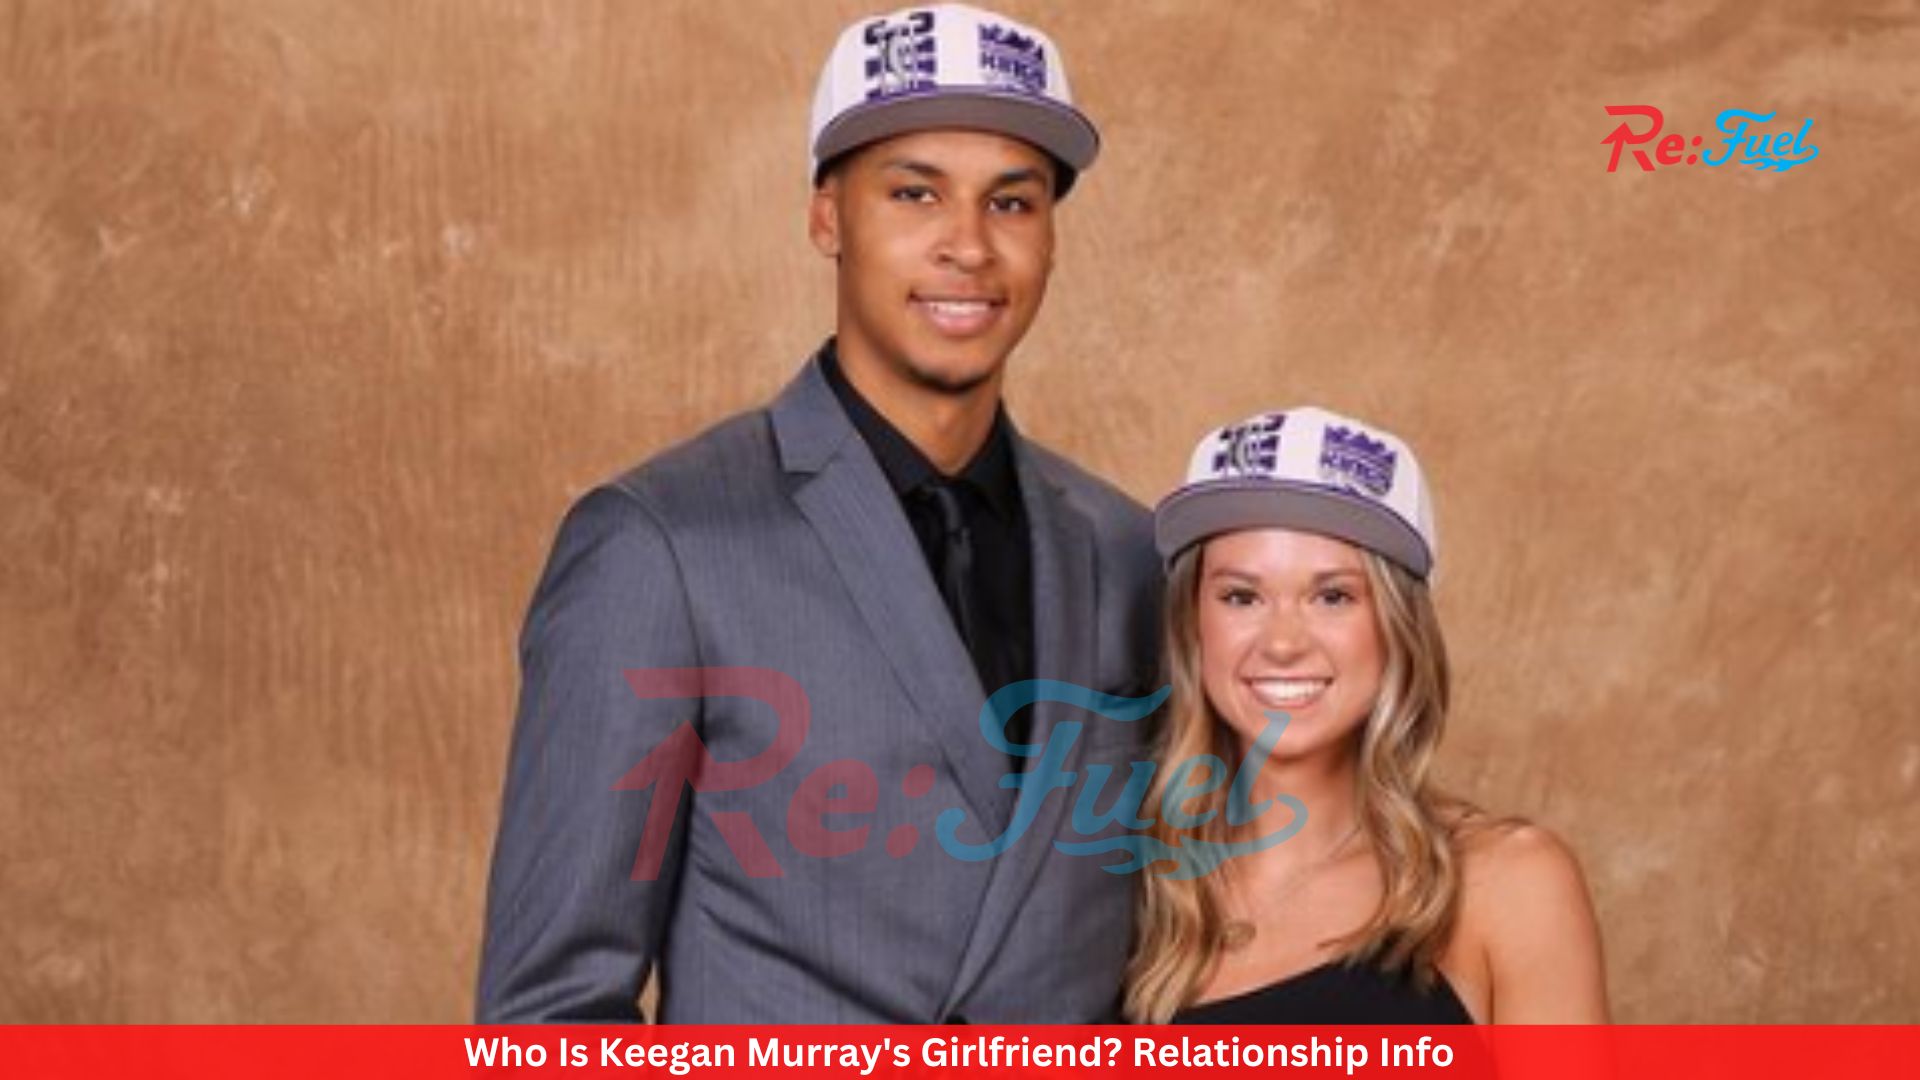 Who Is Keegan Murray's Girlfriend? Relationship Info